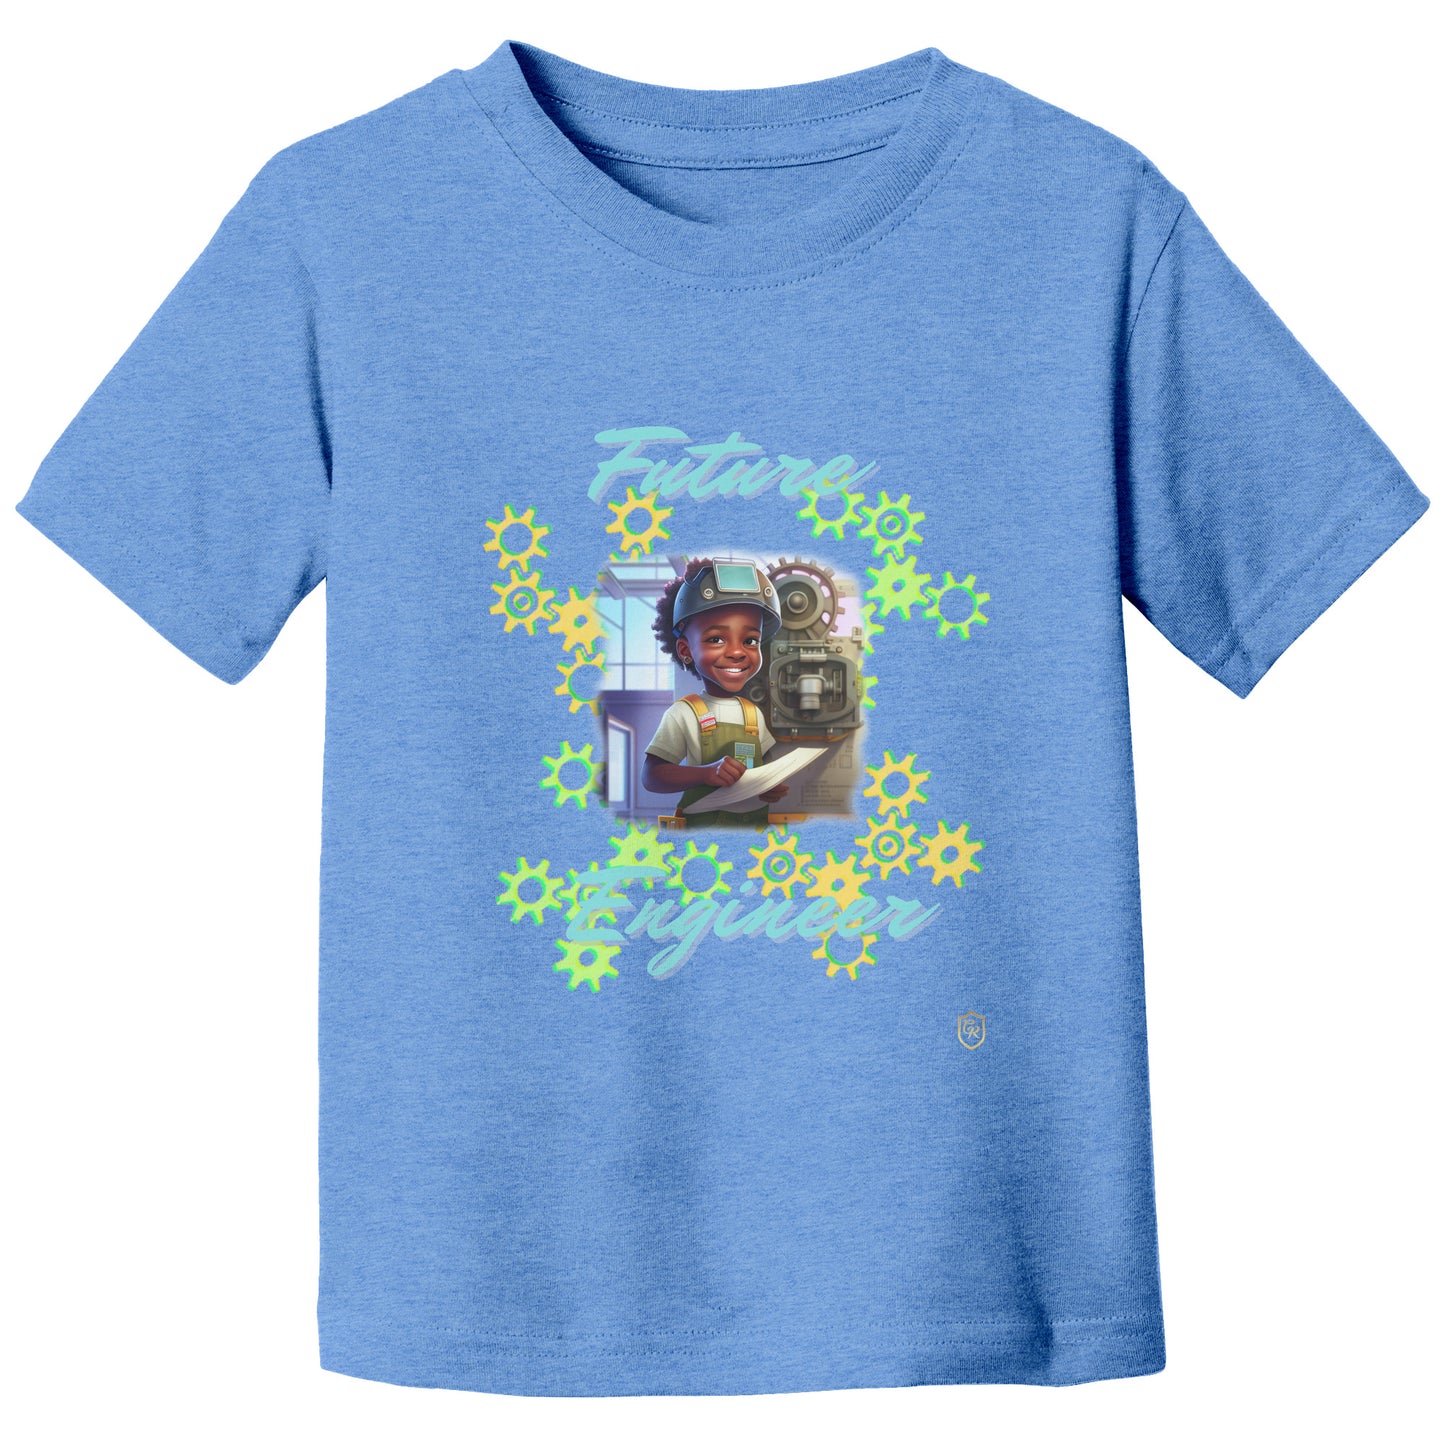 Girl's Future Engineer T-shirt